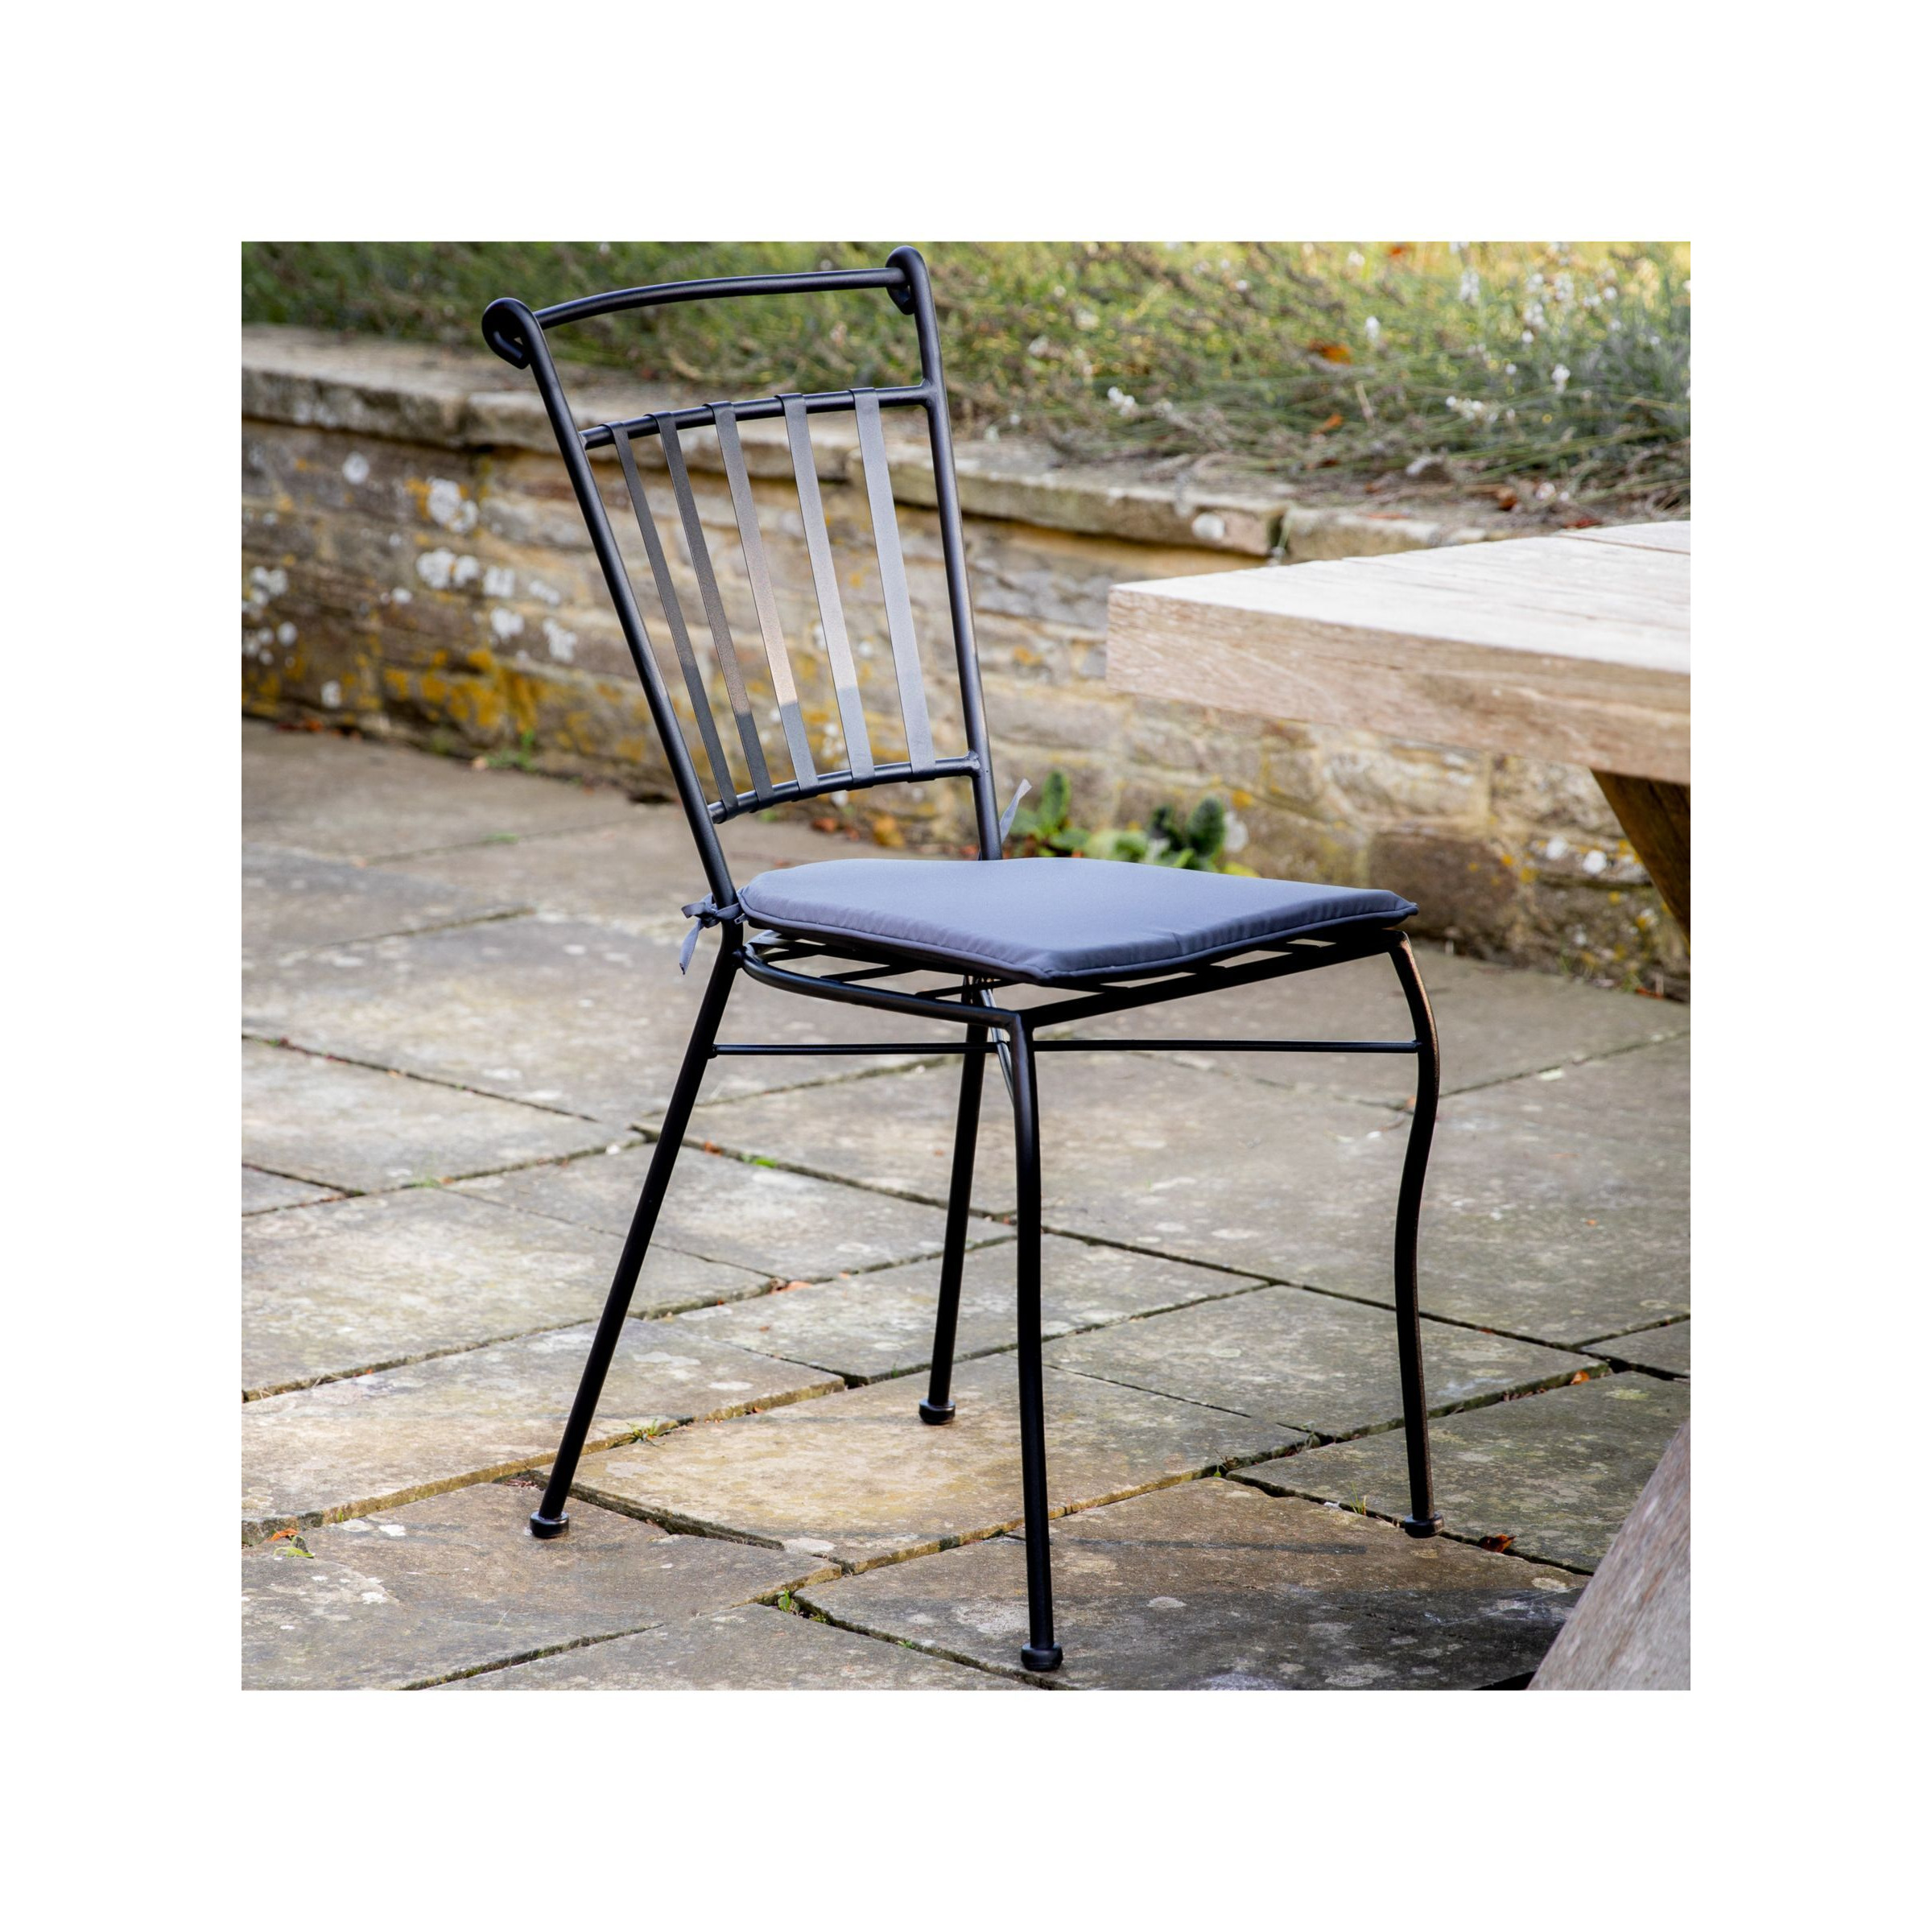 Gallery Direct Ripetta Metal Garden Dining Chair, Black - image 1